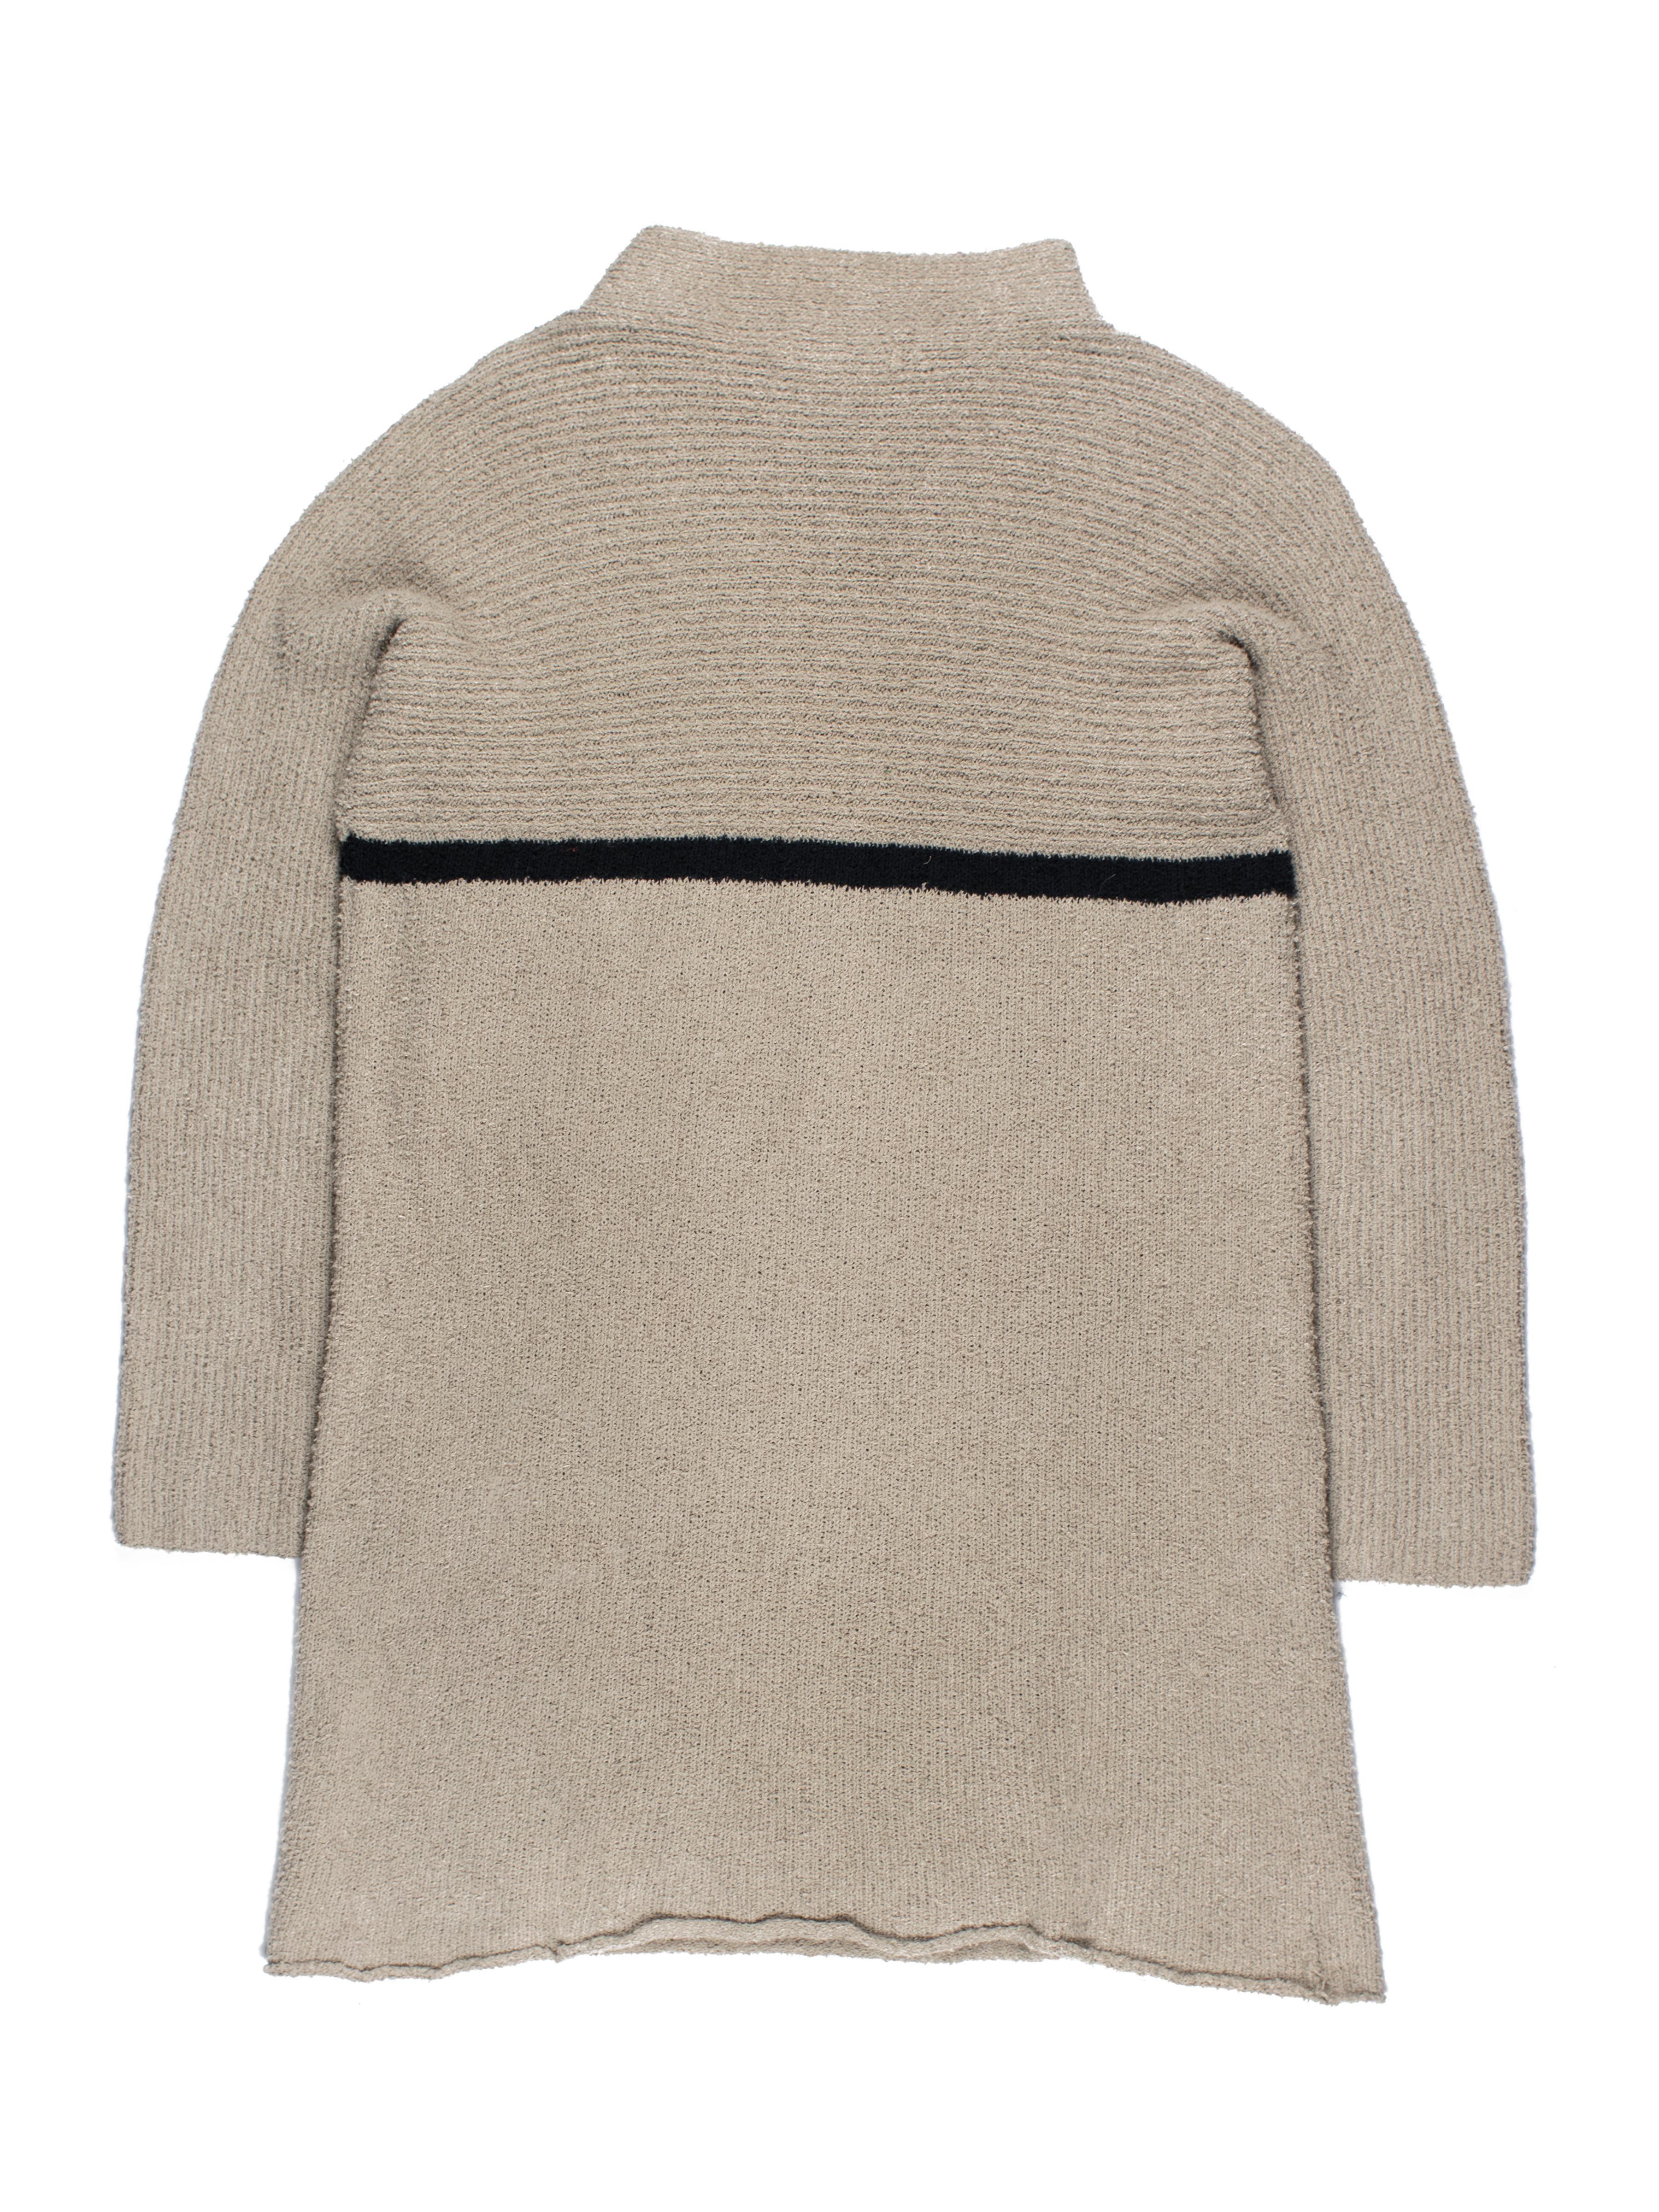 Brown Yohji Yamamoto Y's for Men Striped Pocket Sweater